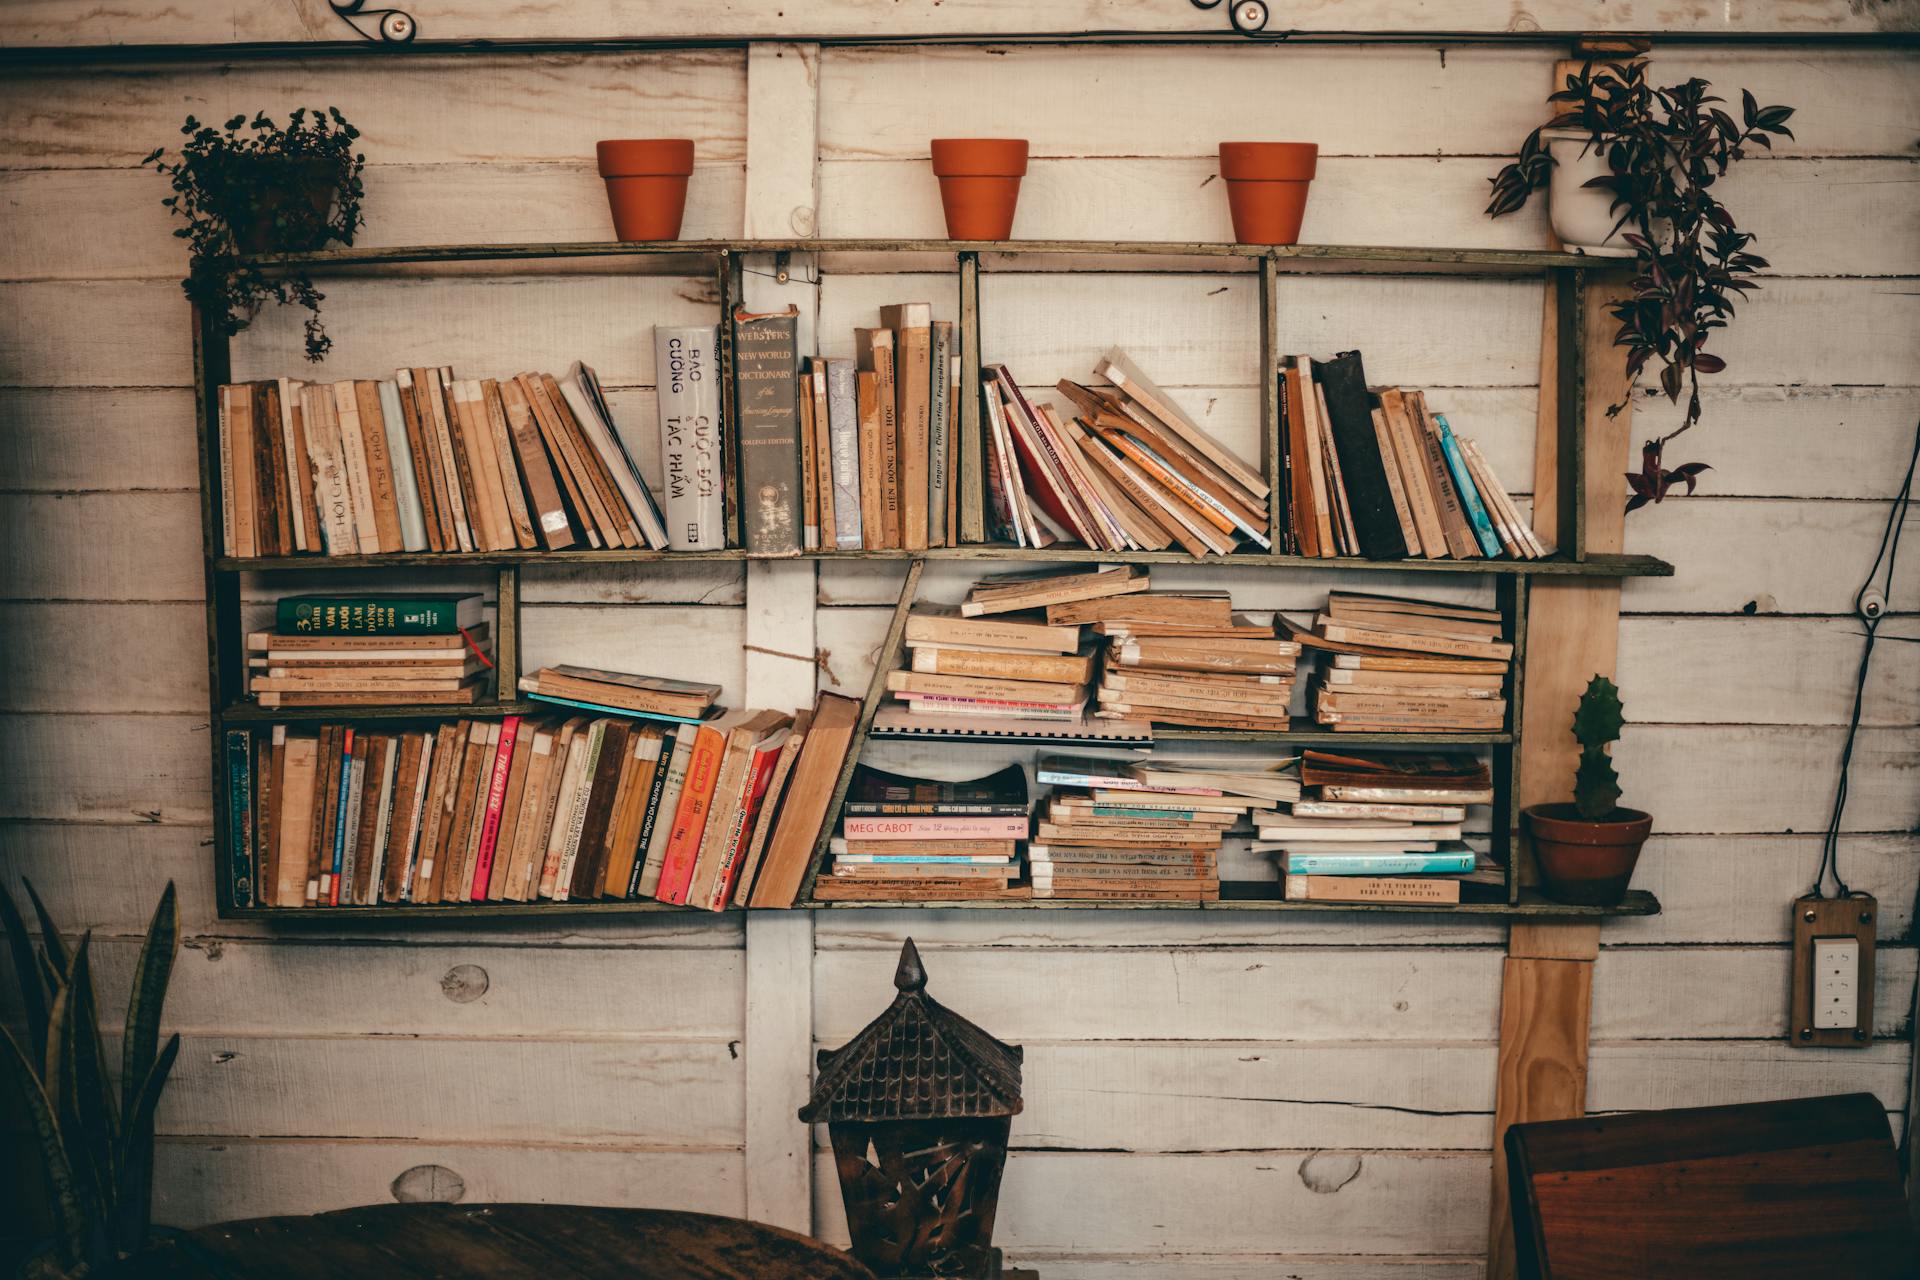 A messy bookshelf | Source: Pexels